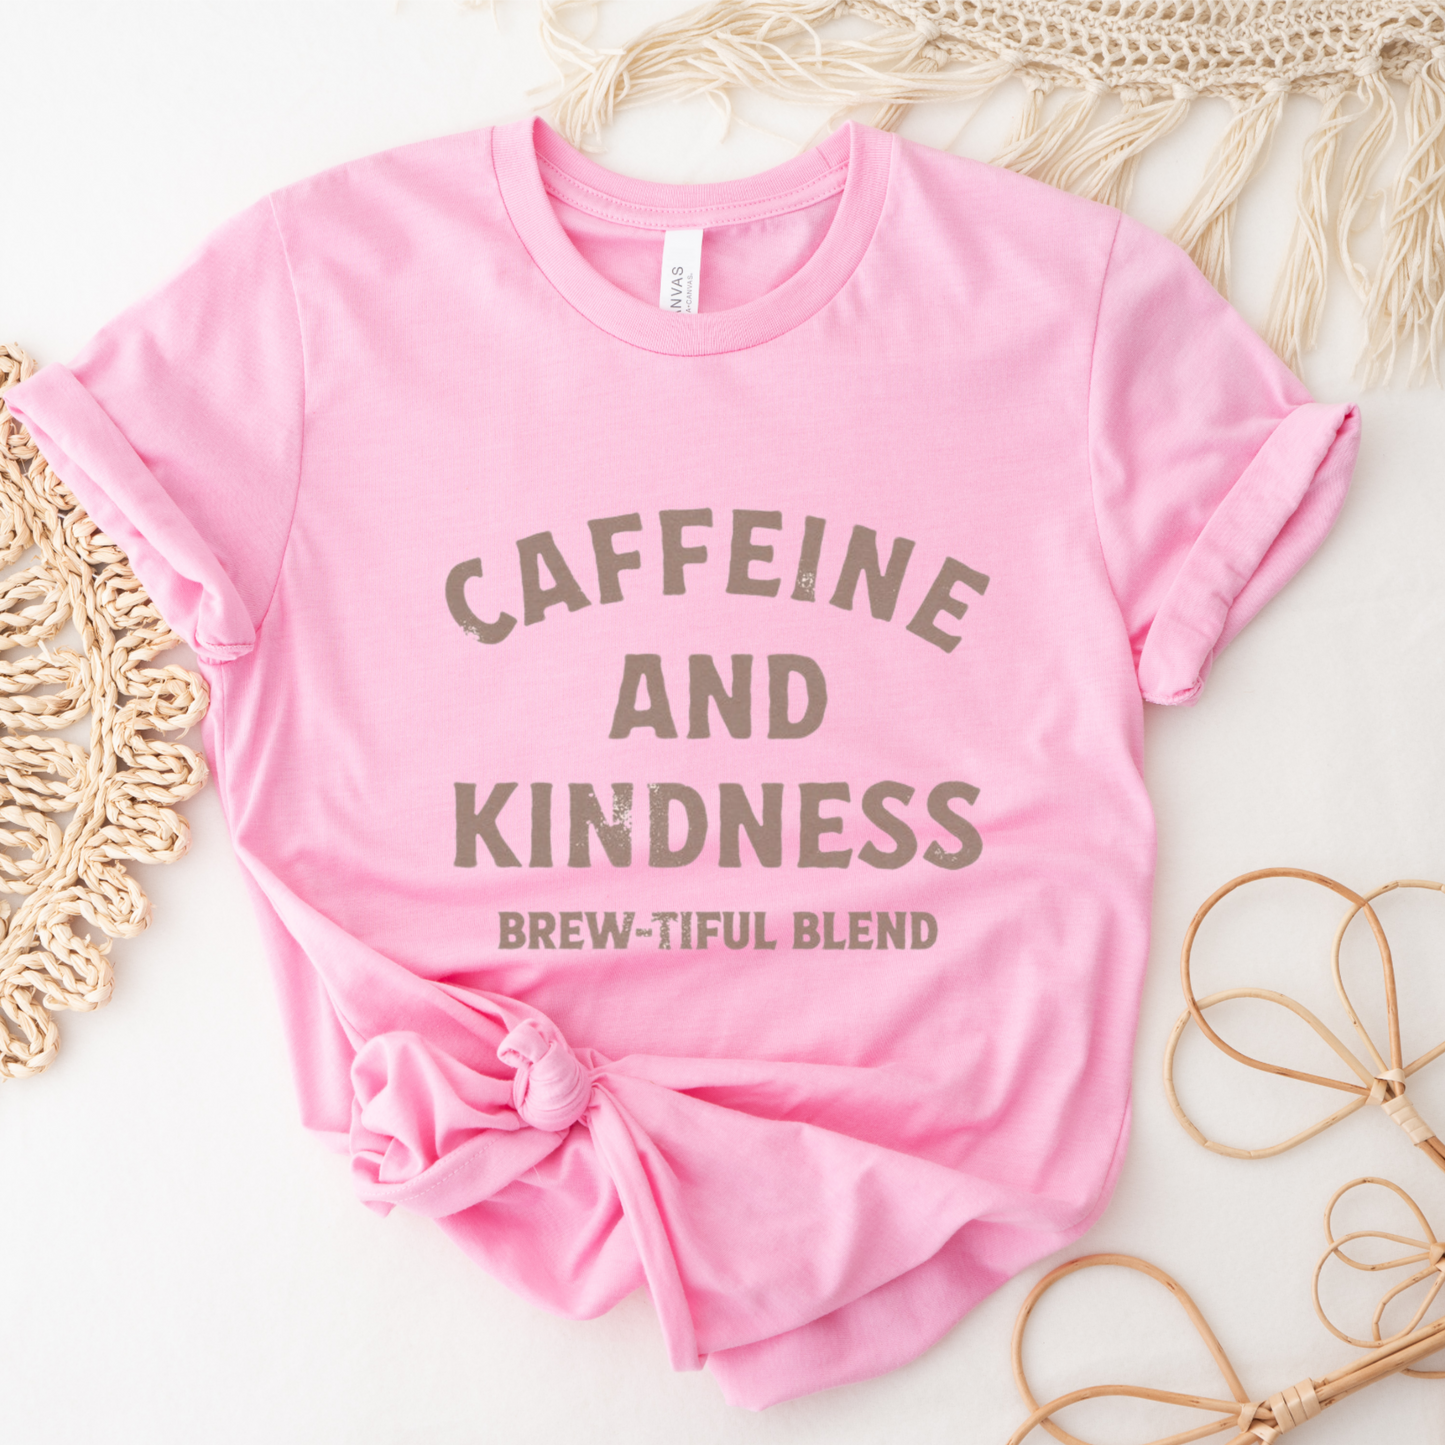 Caffeine + Kindness tee